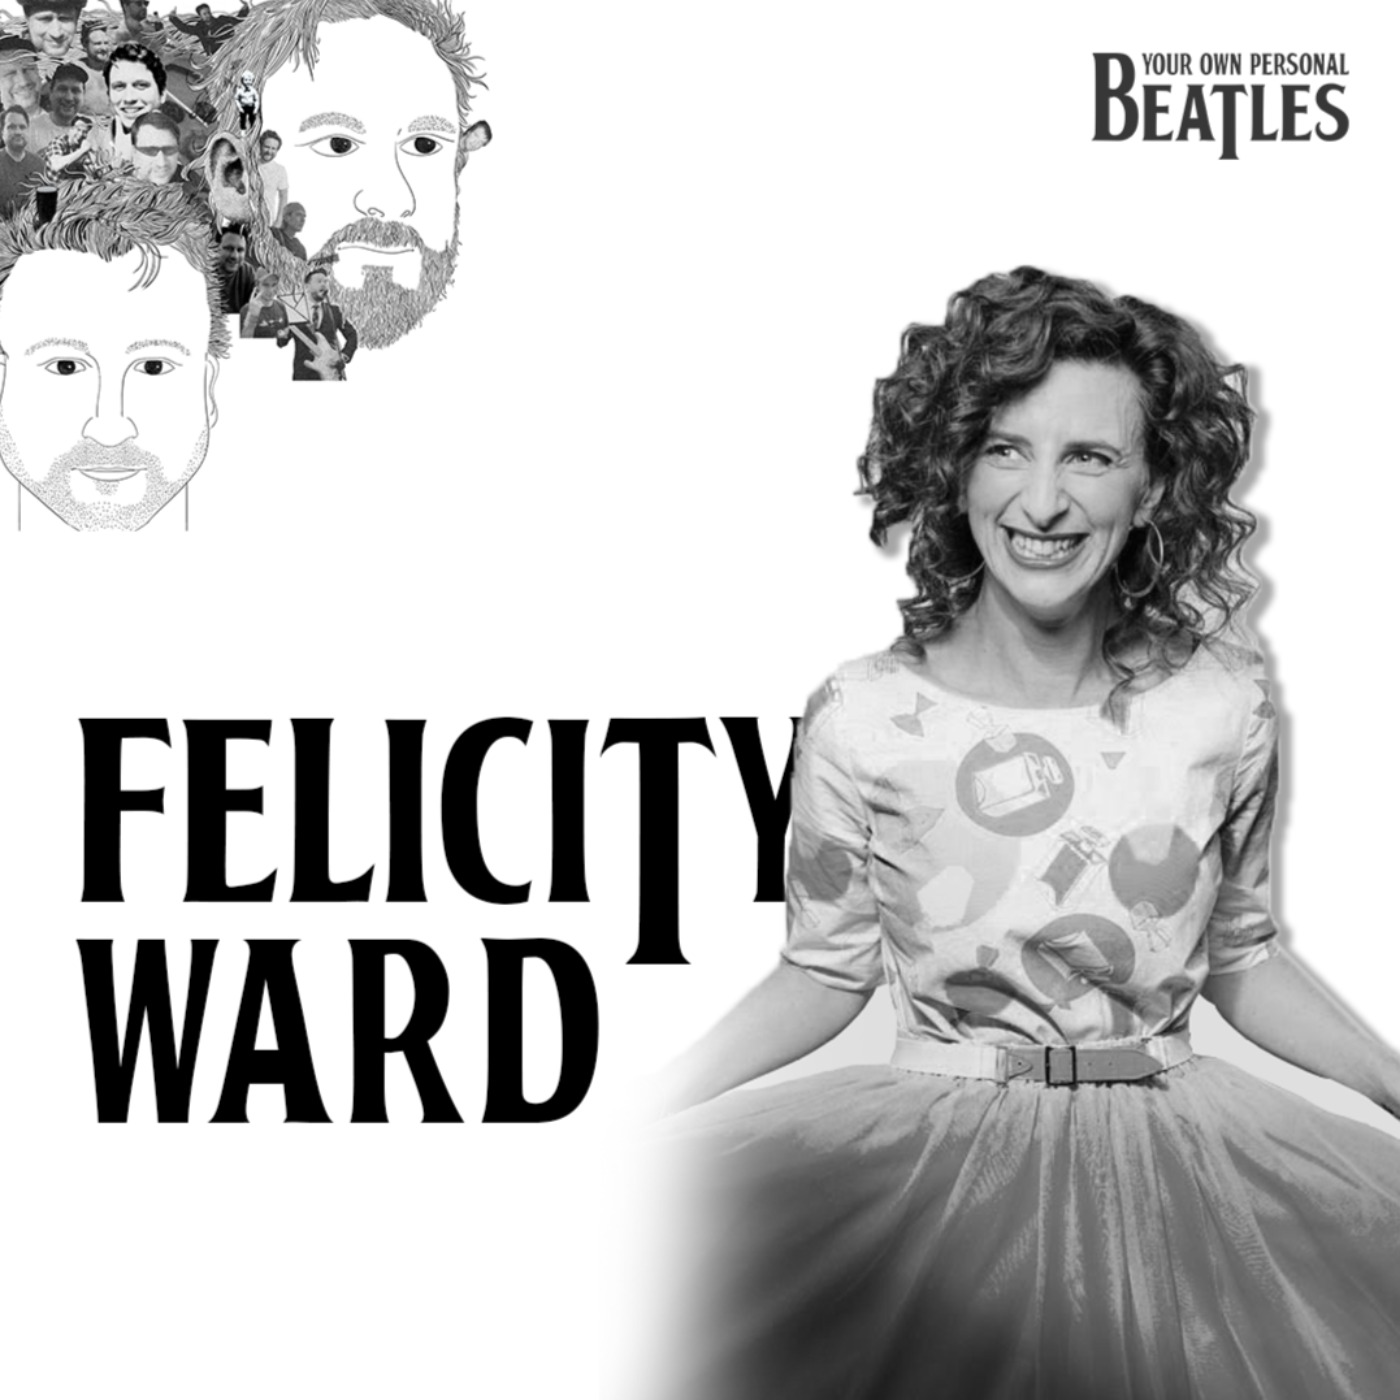 Felicity Ward's Personal Beatles